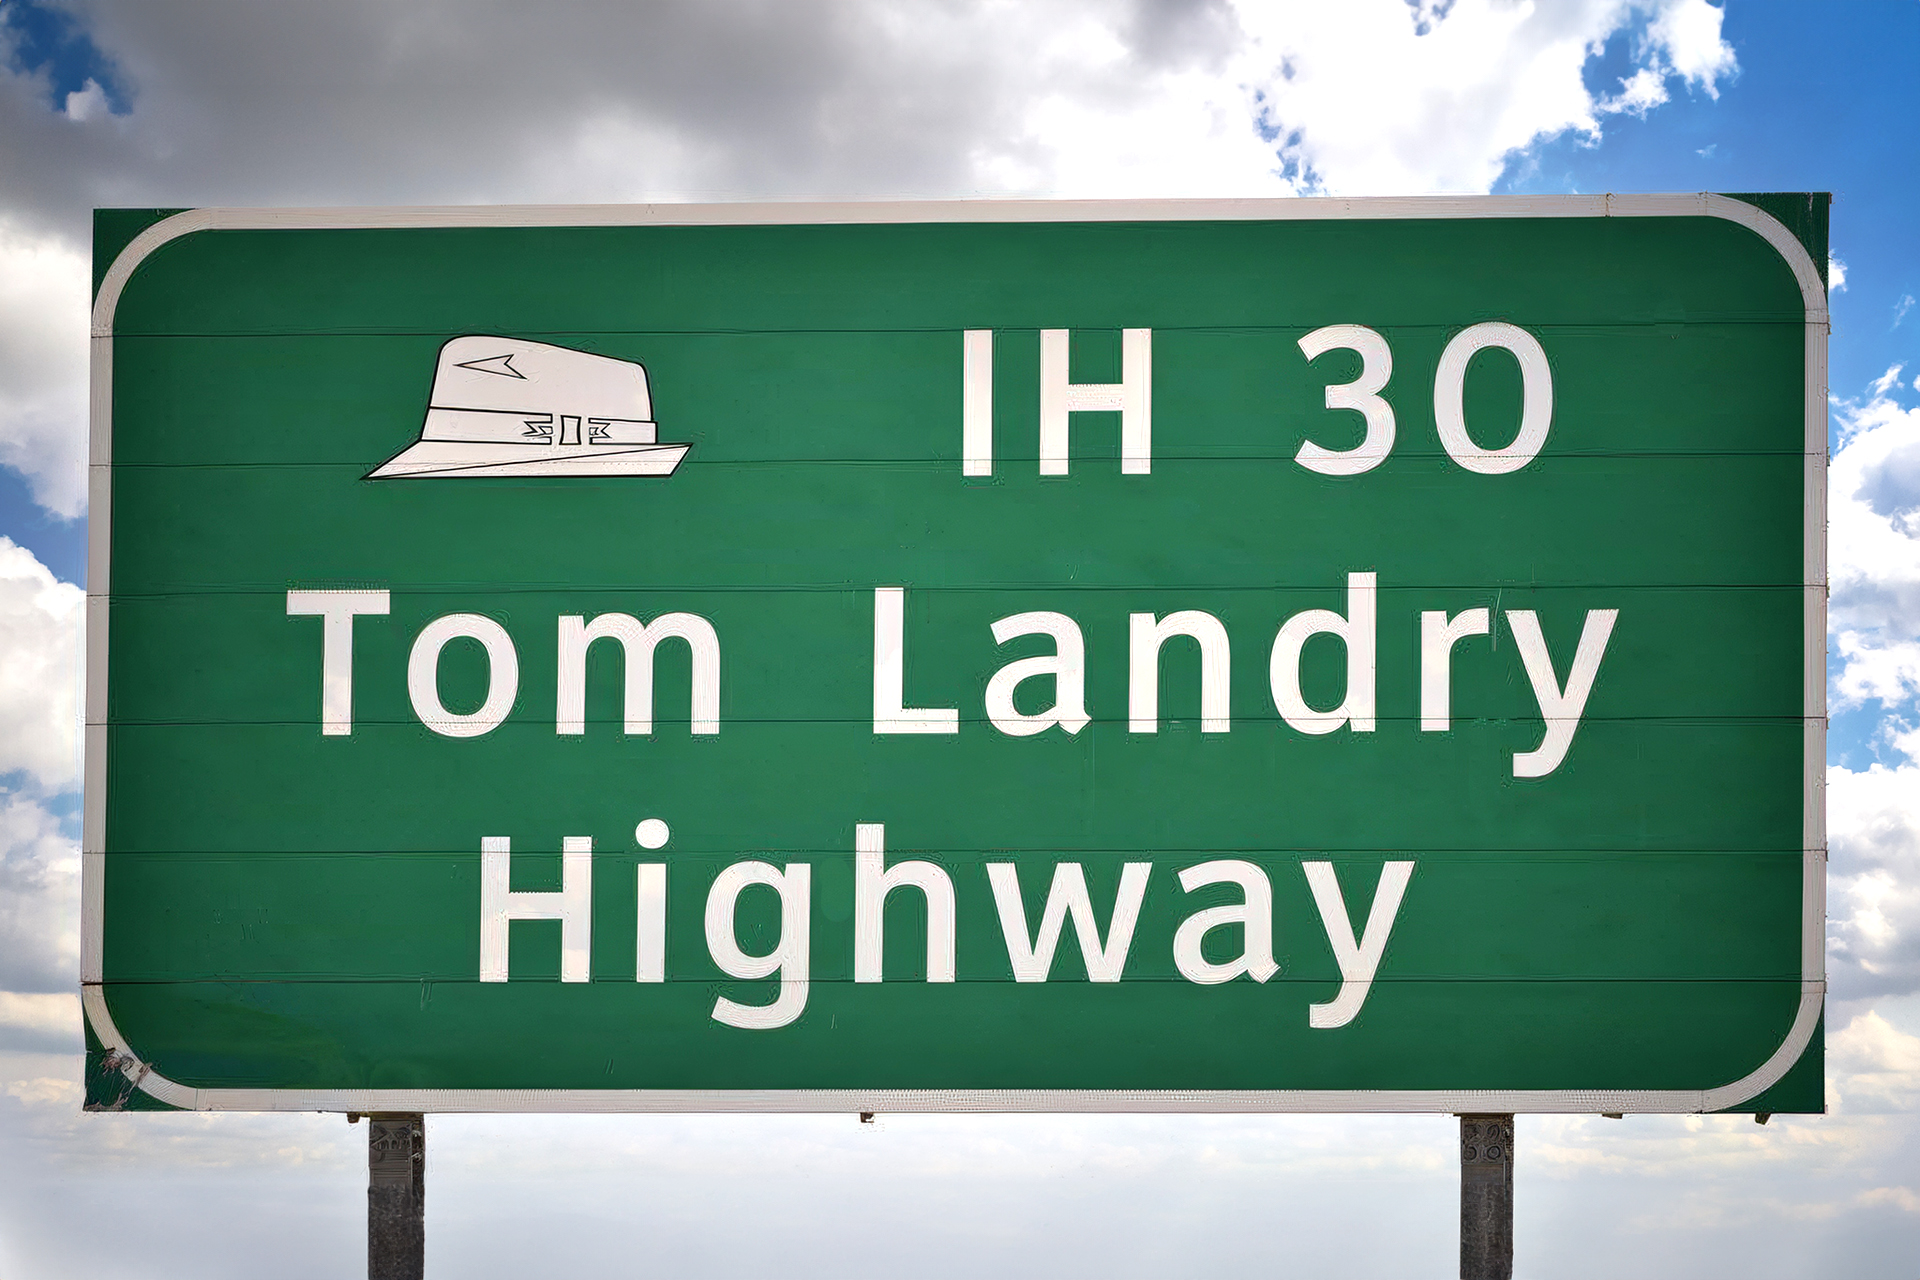 The Highways that Helped Make Arlington America's Mid-City, Part 1 of 3: IH-30 (Tom Landry Highway)